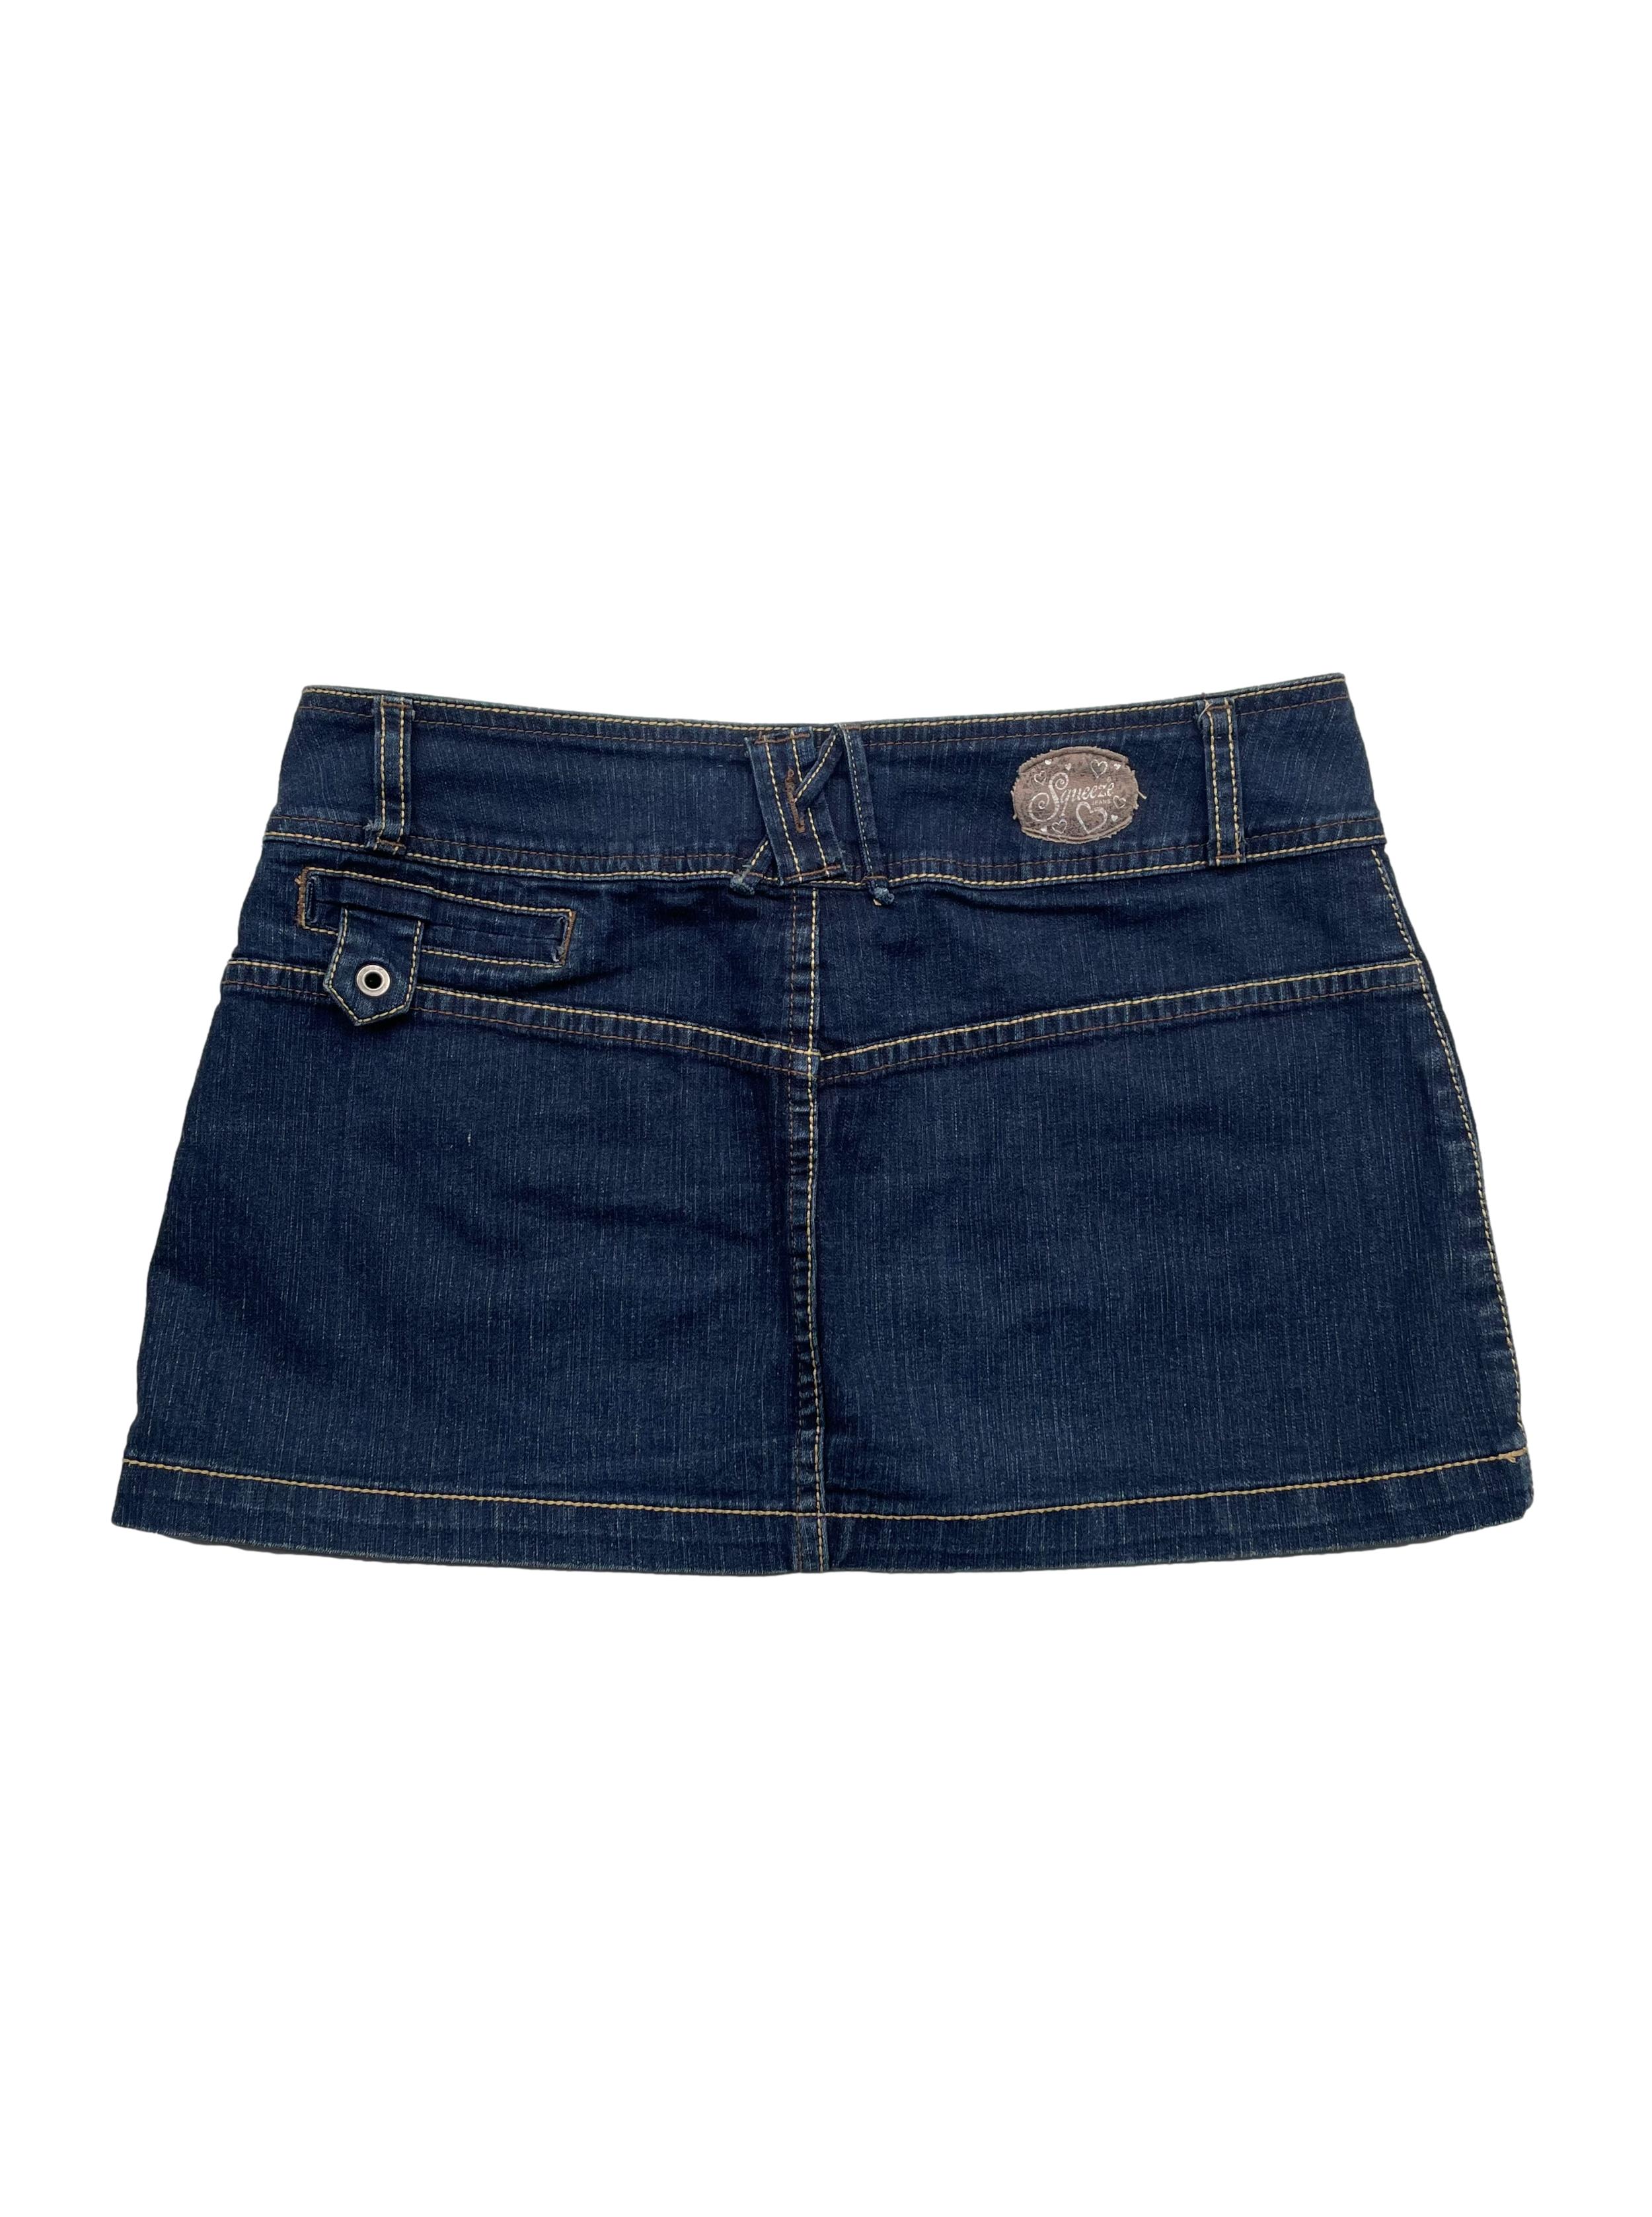 Mini falda Jean Squeeze, con costuras a contraste y bolsillos parche. Pretina 76cm, Largo 30cm.